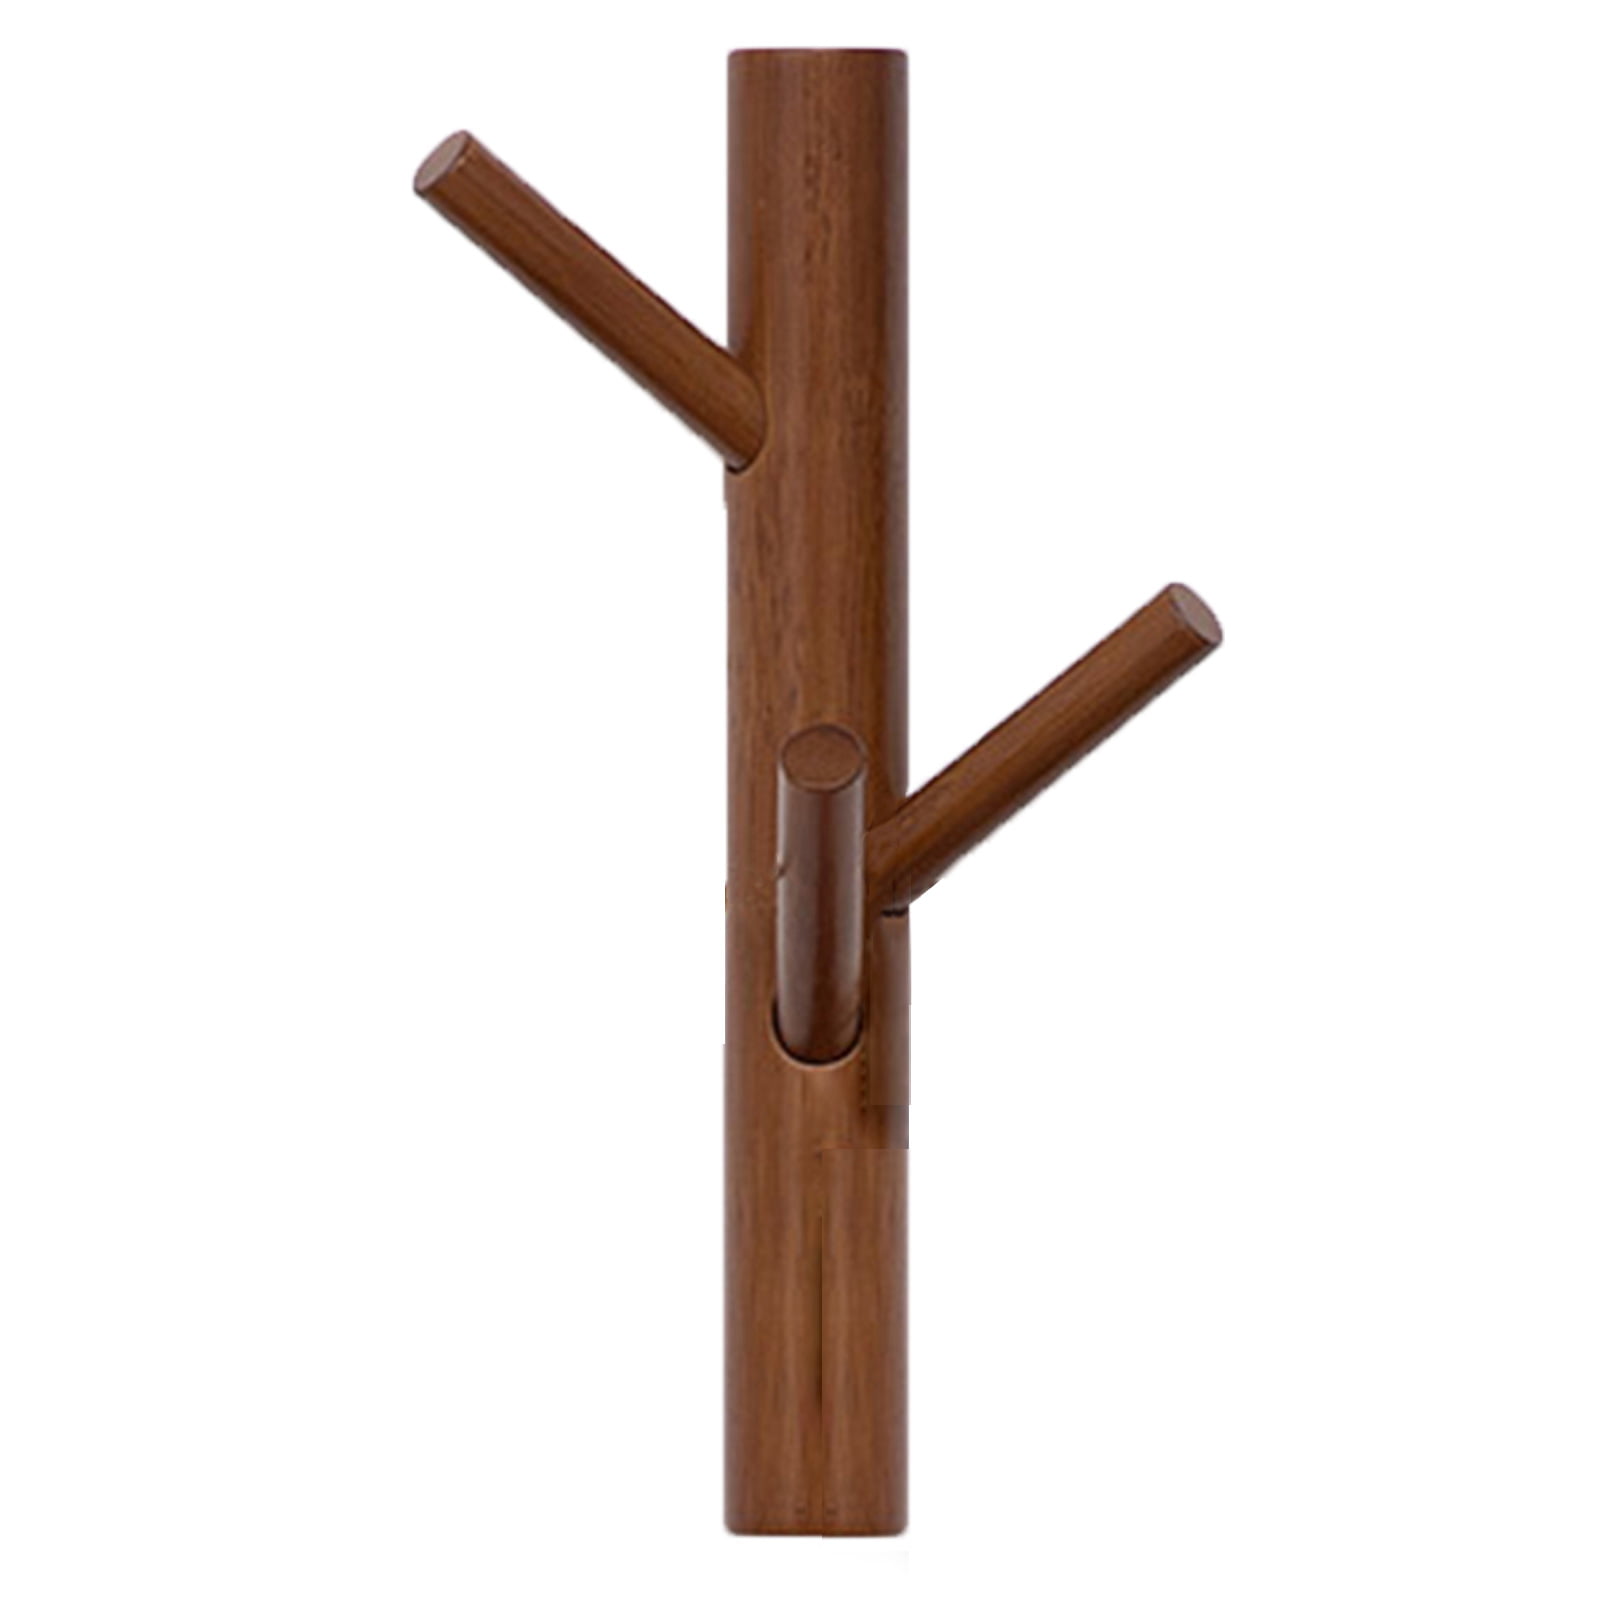 Modern Wooden Coat Wall Hooks - Nordic Bamboo Coat Rack Hanger Bedroom Wall  Hanging Tree Branch Hats Bag Holder - Easy to Install - Water-Resistant 